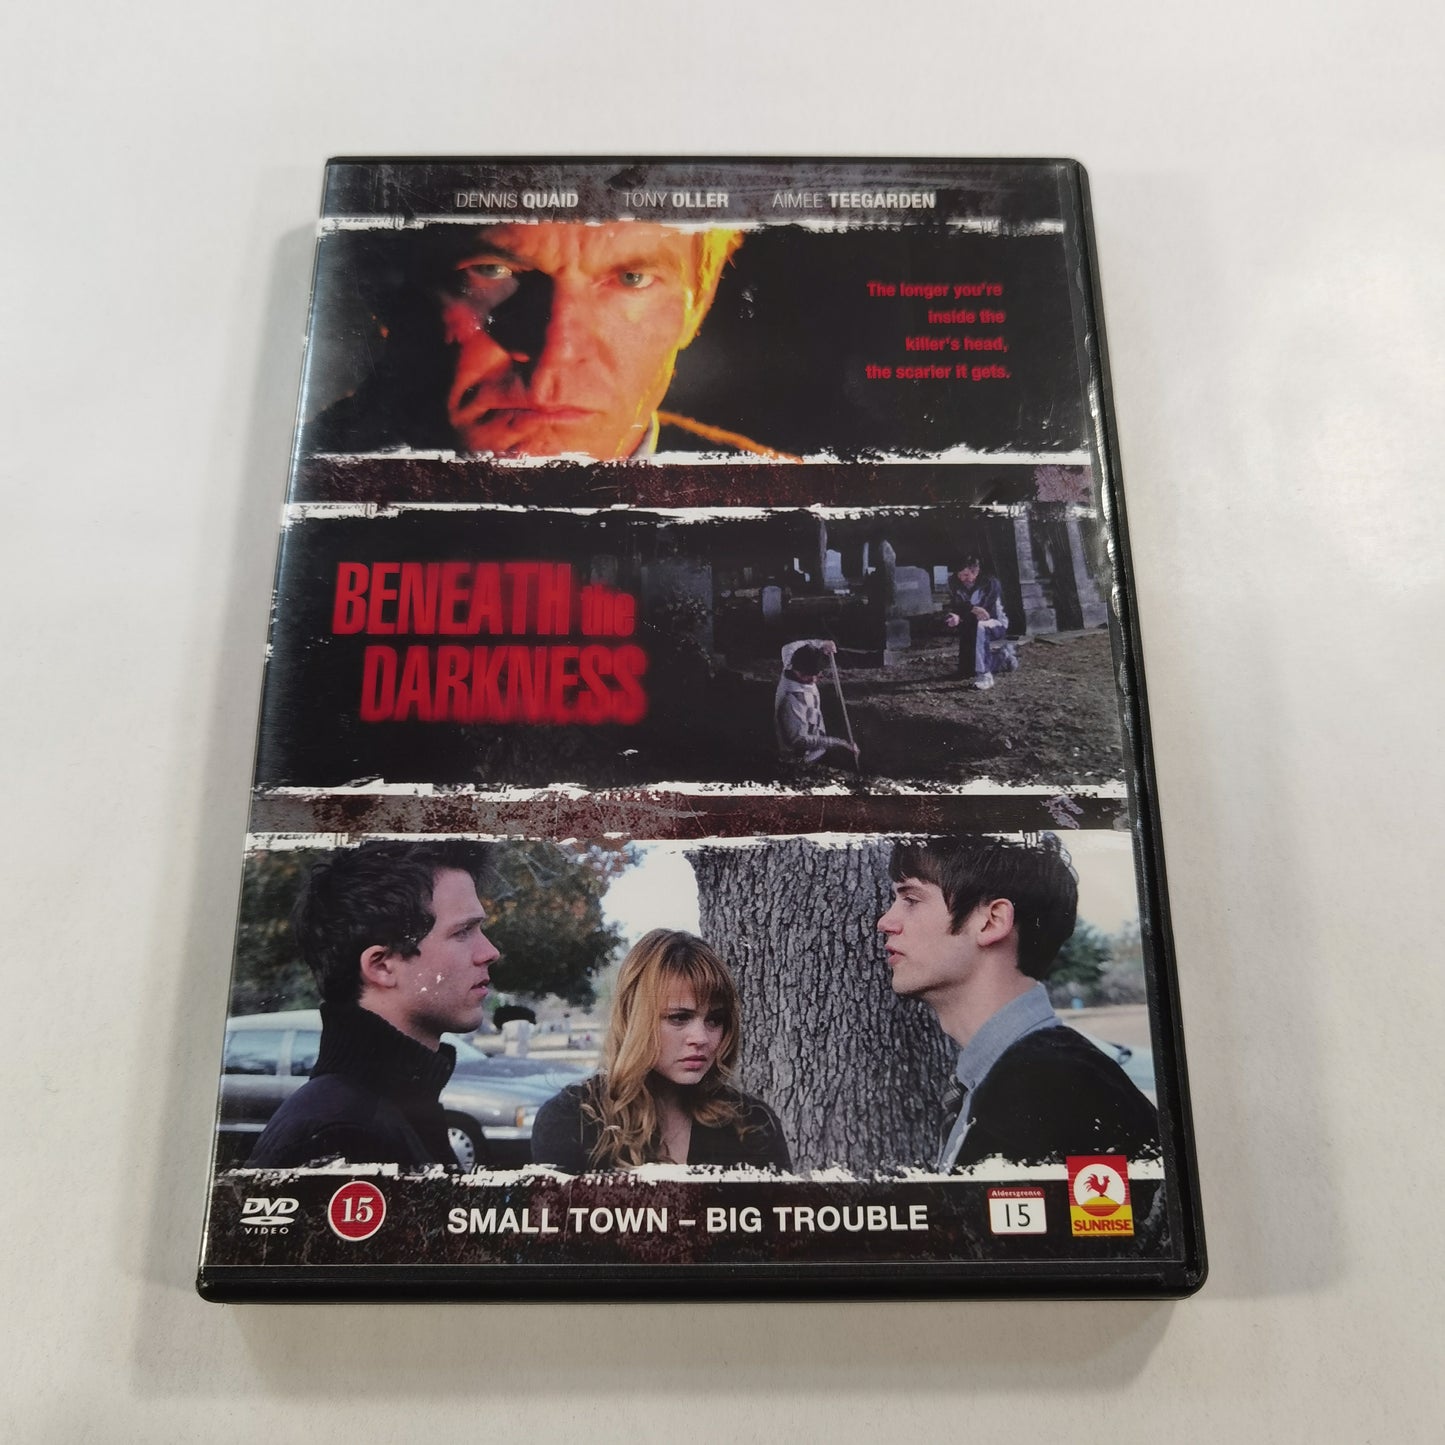 Beneath the Darkness (2011) - DVD SE NO DK FI 2013